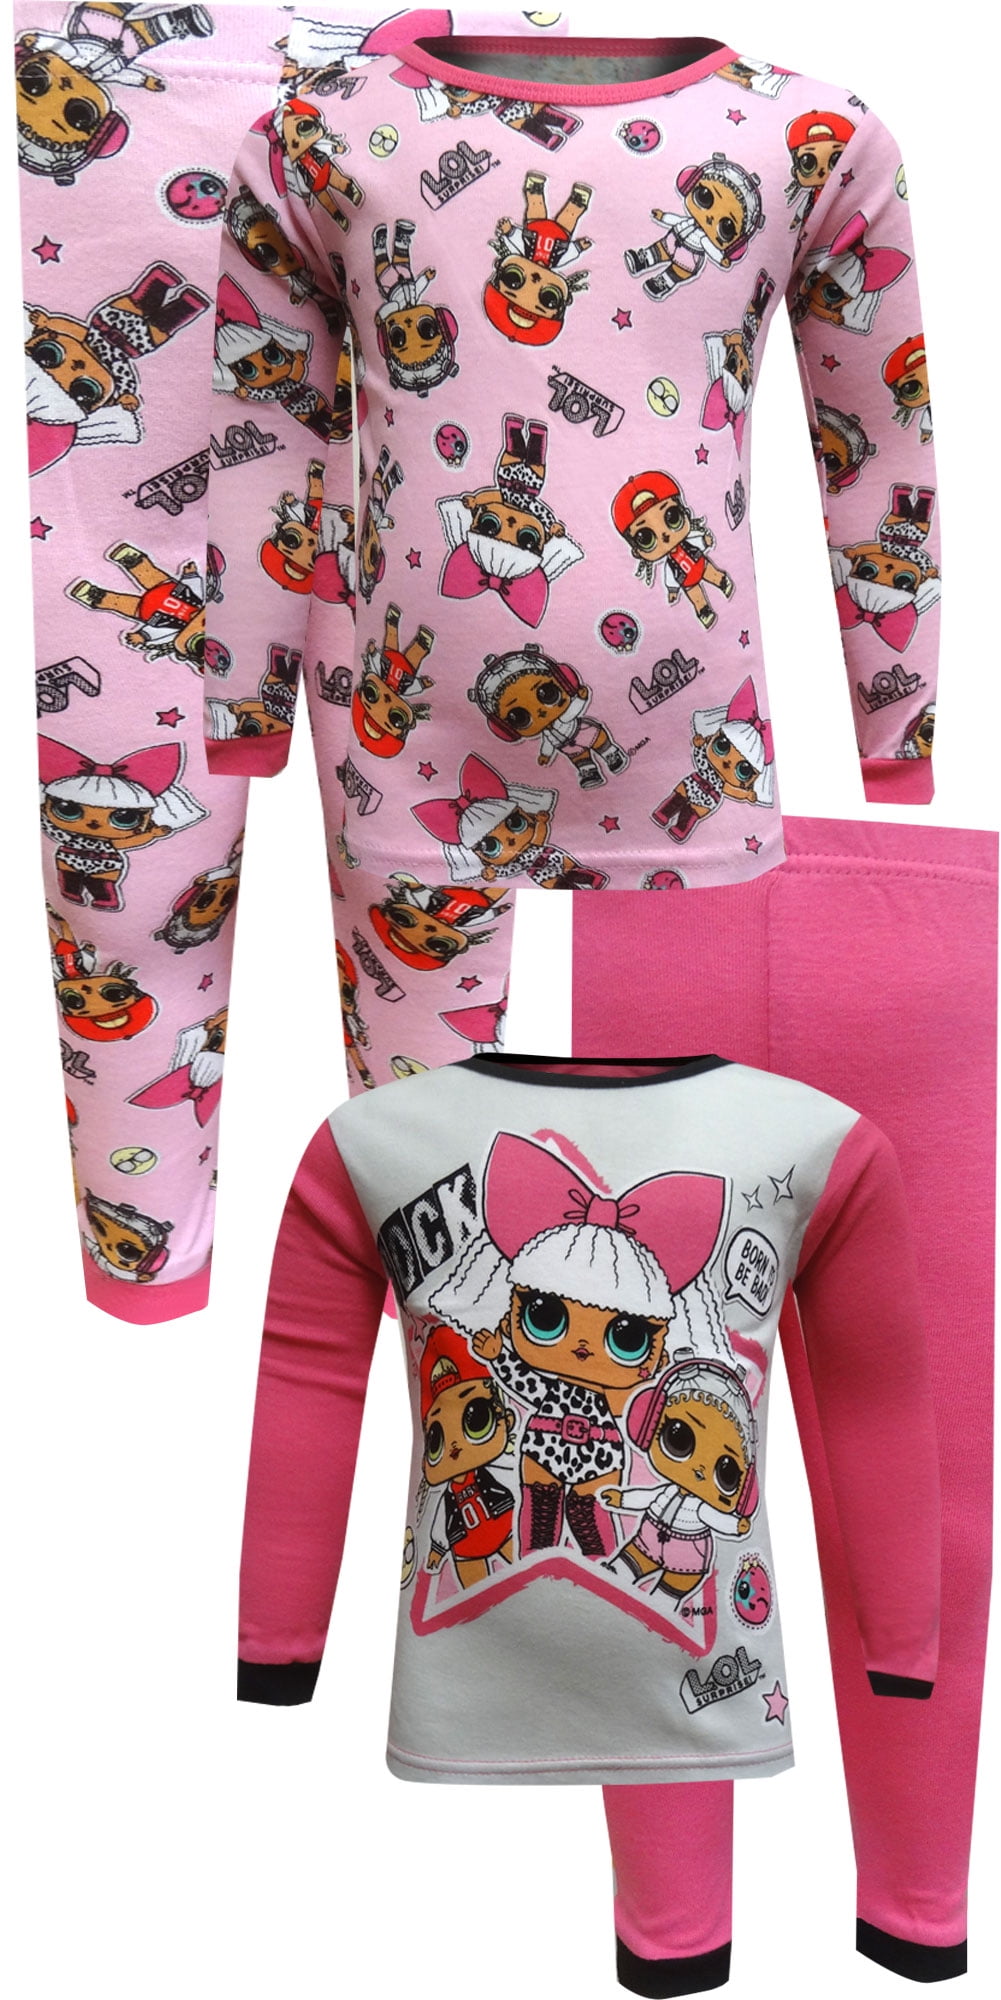 LOL Surprise PyjamasLOL Surprise Doll PJsBorn To Rock Pyjama Set